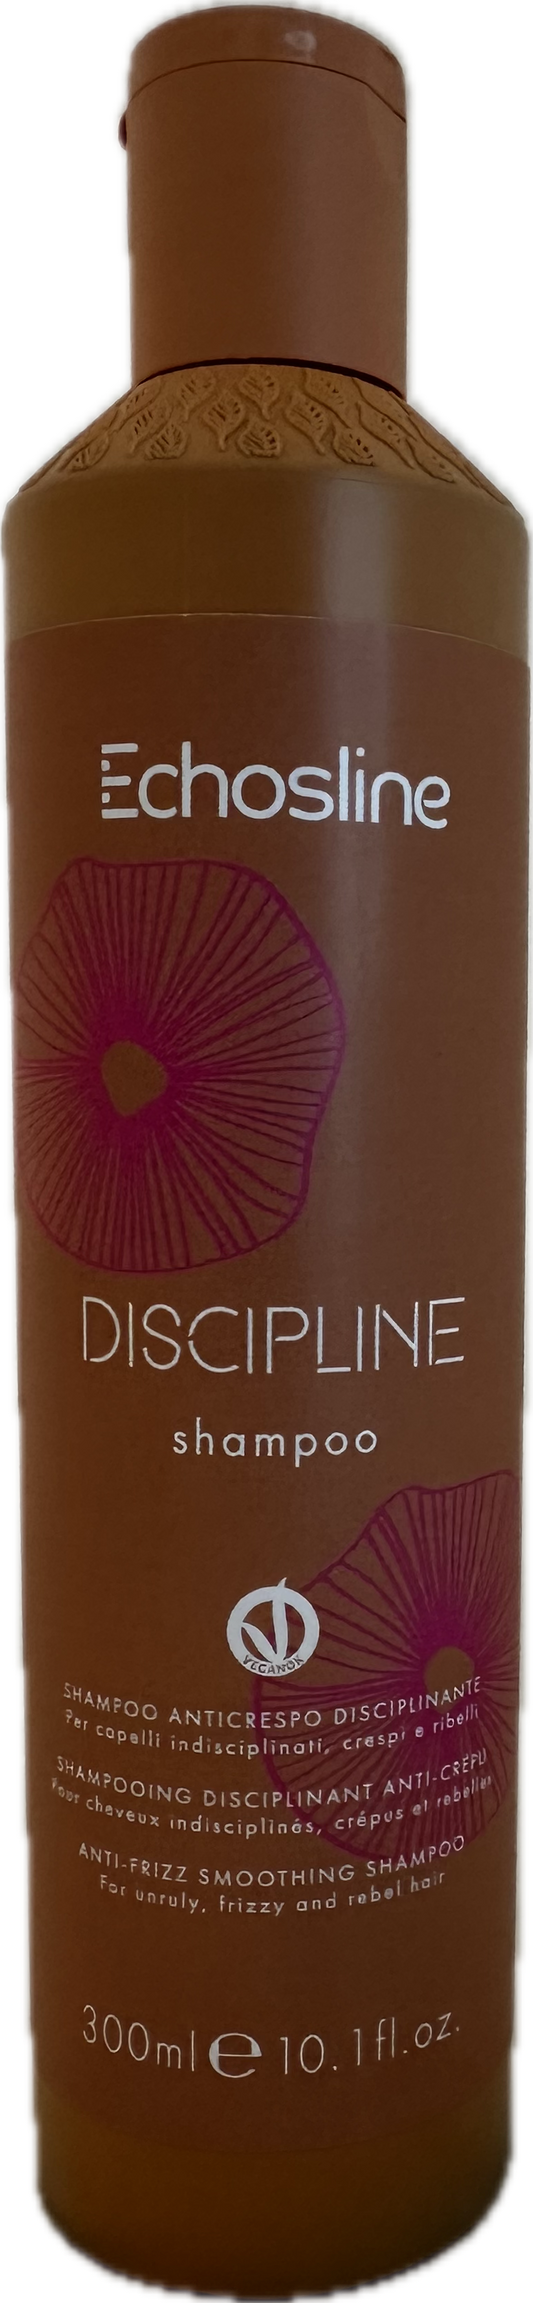 Echosline  Discipline Shampoo 300ml